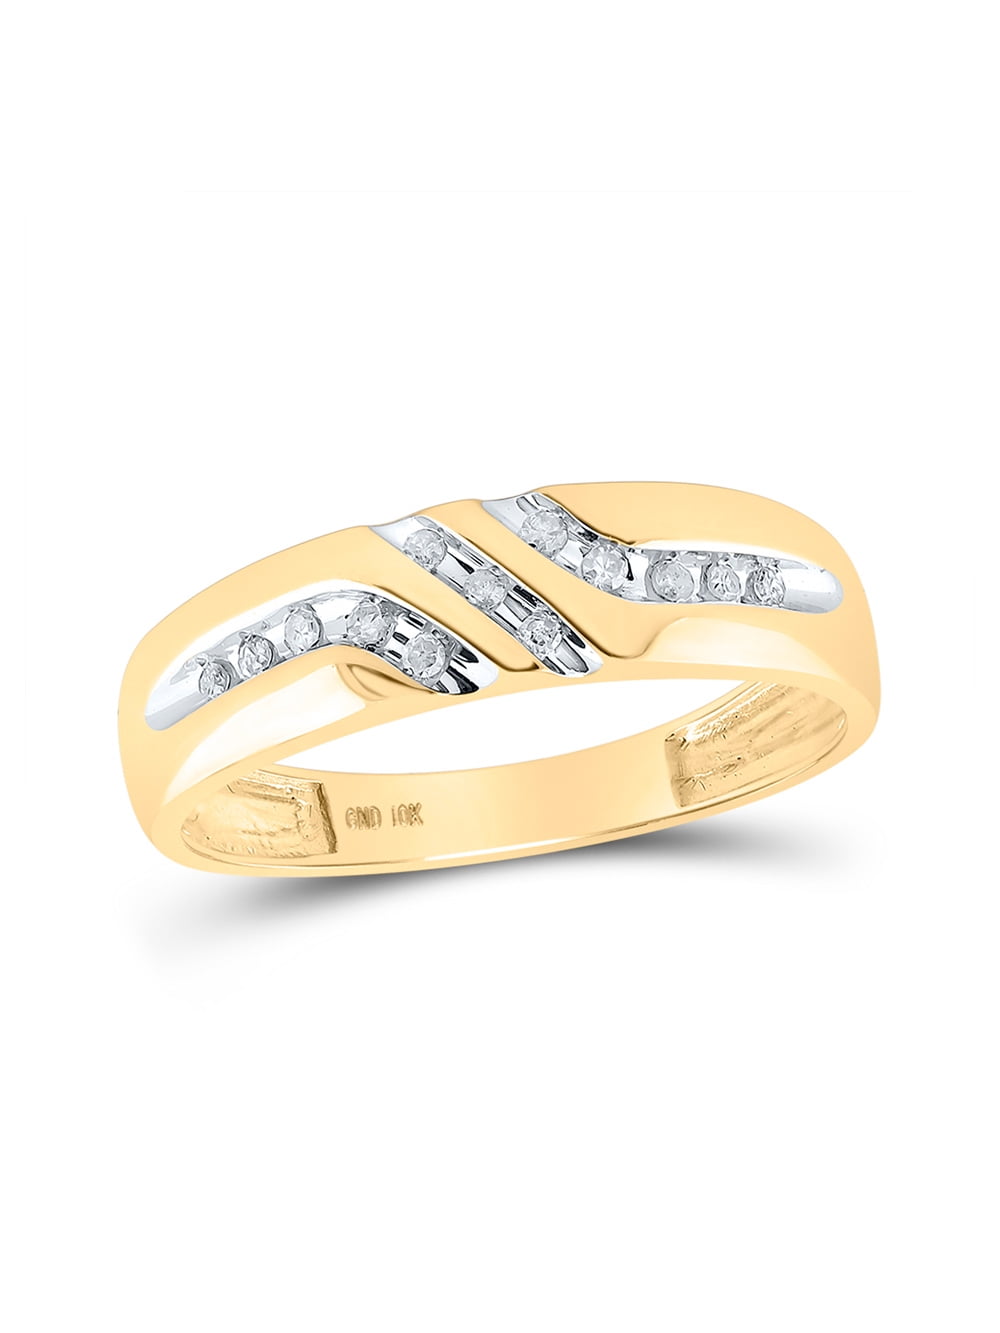 Details about   10k Yellow Gold 0.05Ct TDW Diamond Slant Row Men's Ring H-I, I2 